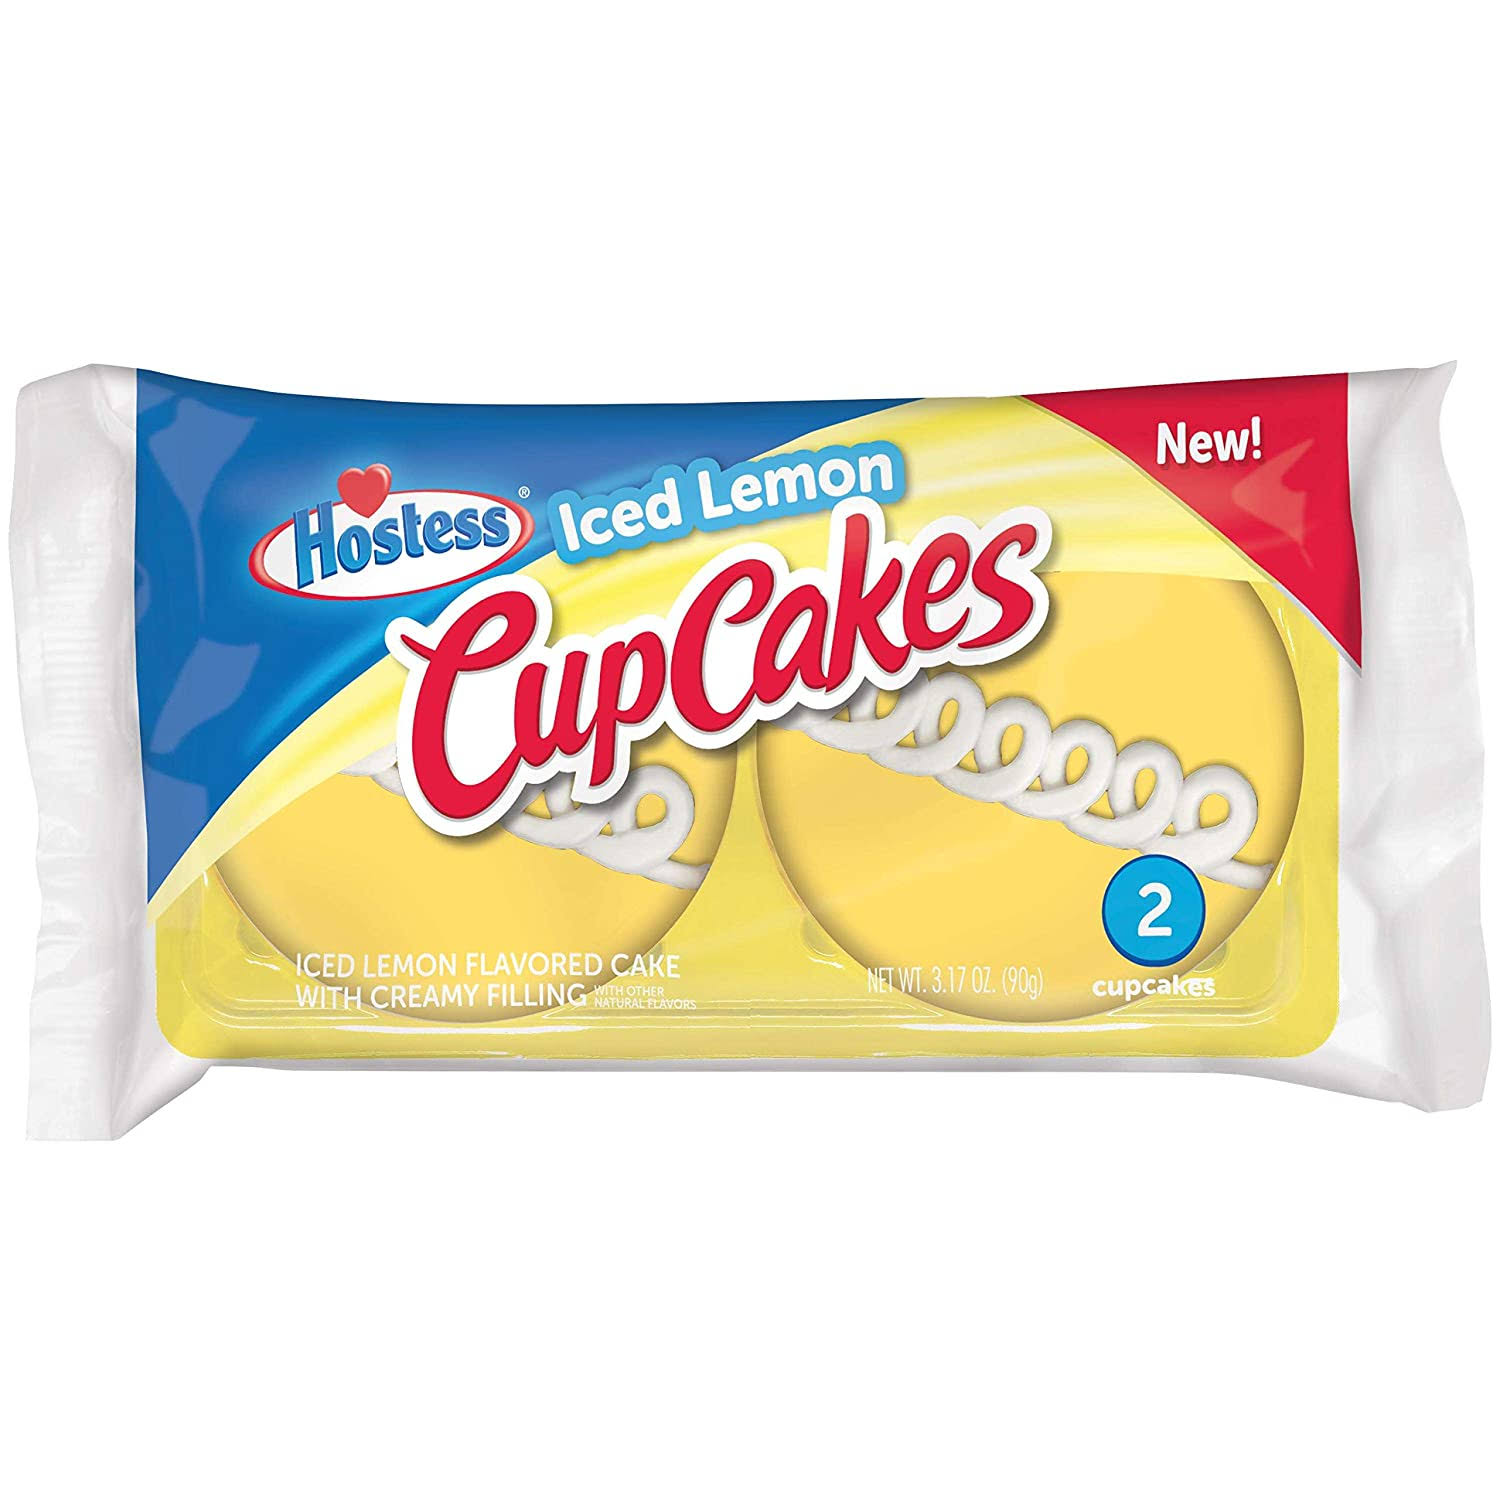 Hostess Iced Lemon Cupcakes 2-Pack, 1 x 2-Pack